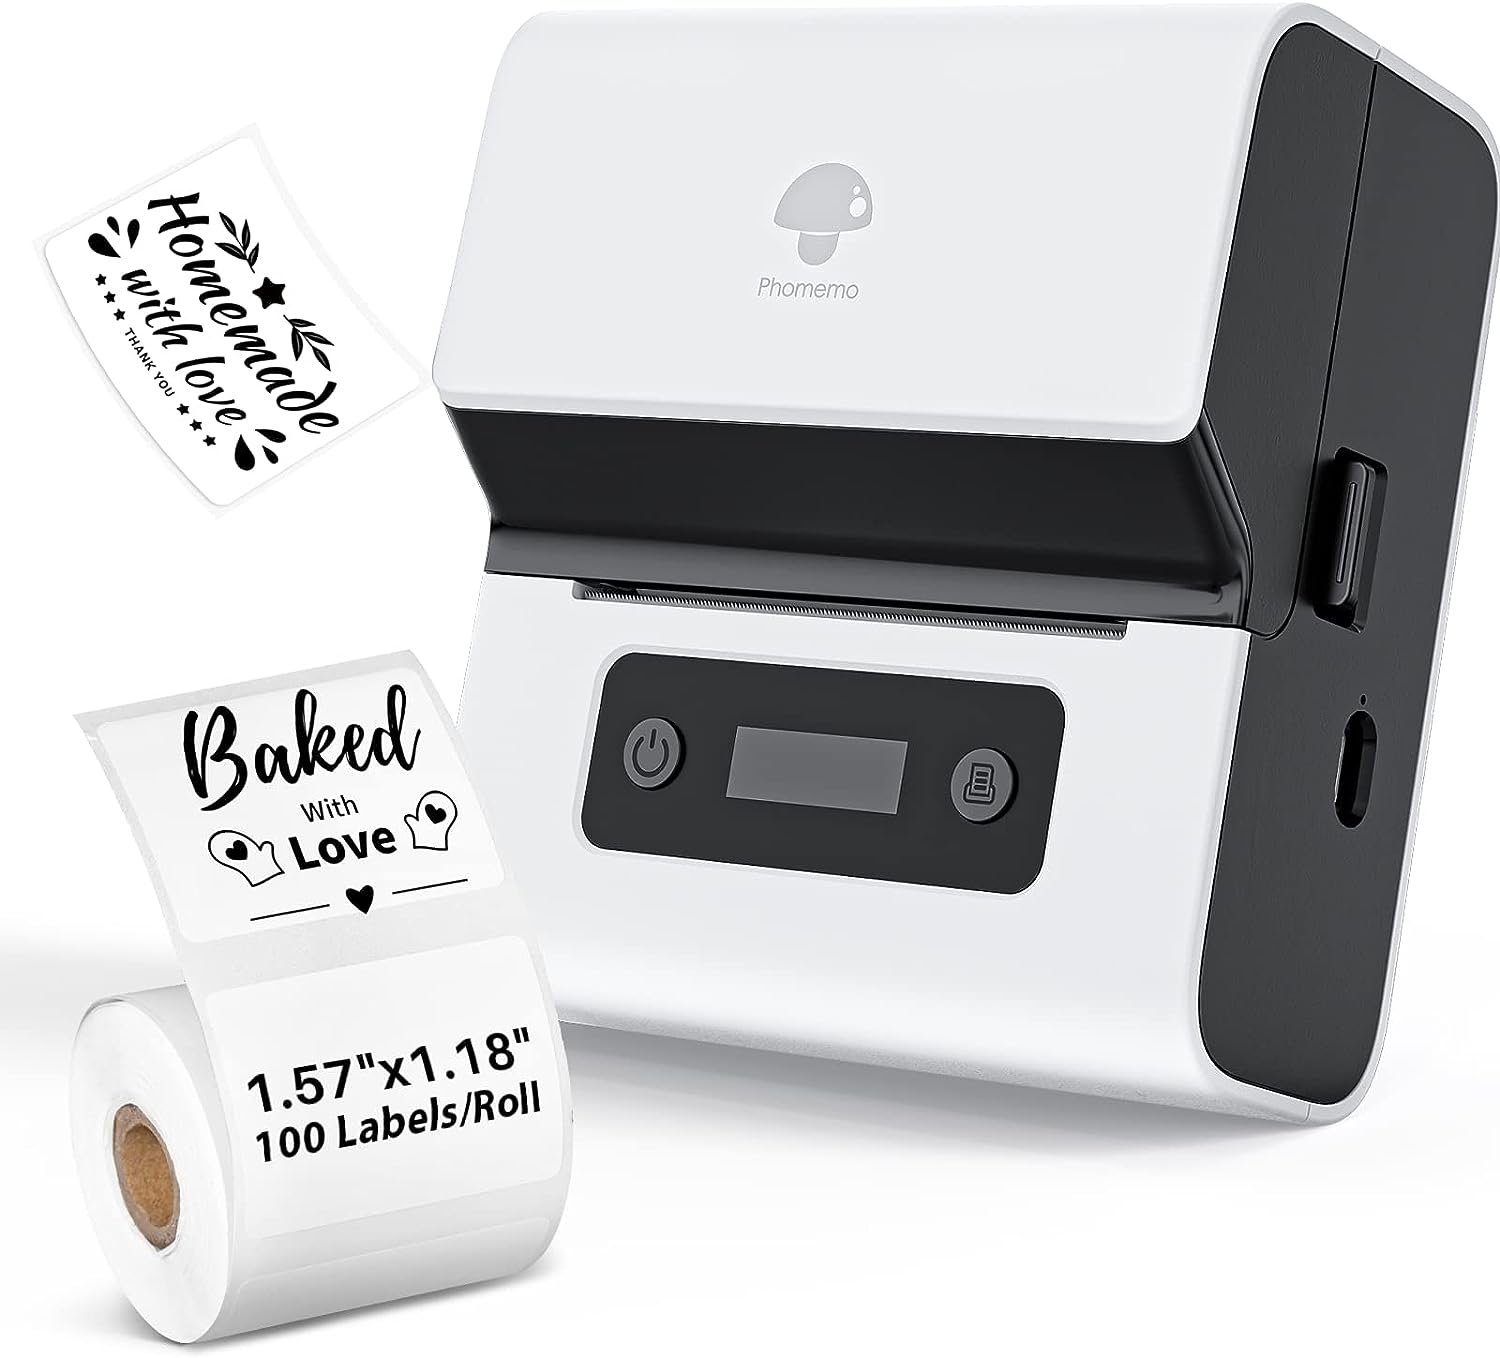 Phomemo M02S Mini Portable Bluetooth Pocket Printer Label Maker